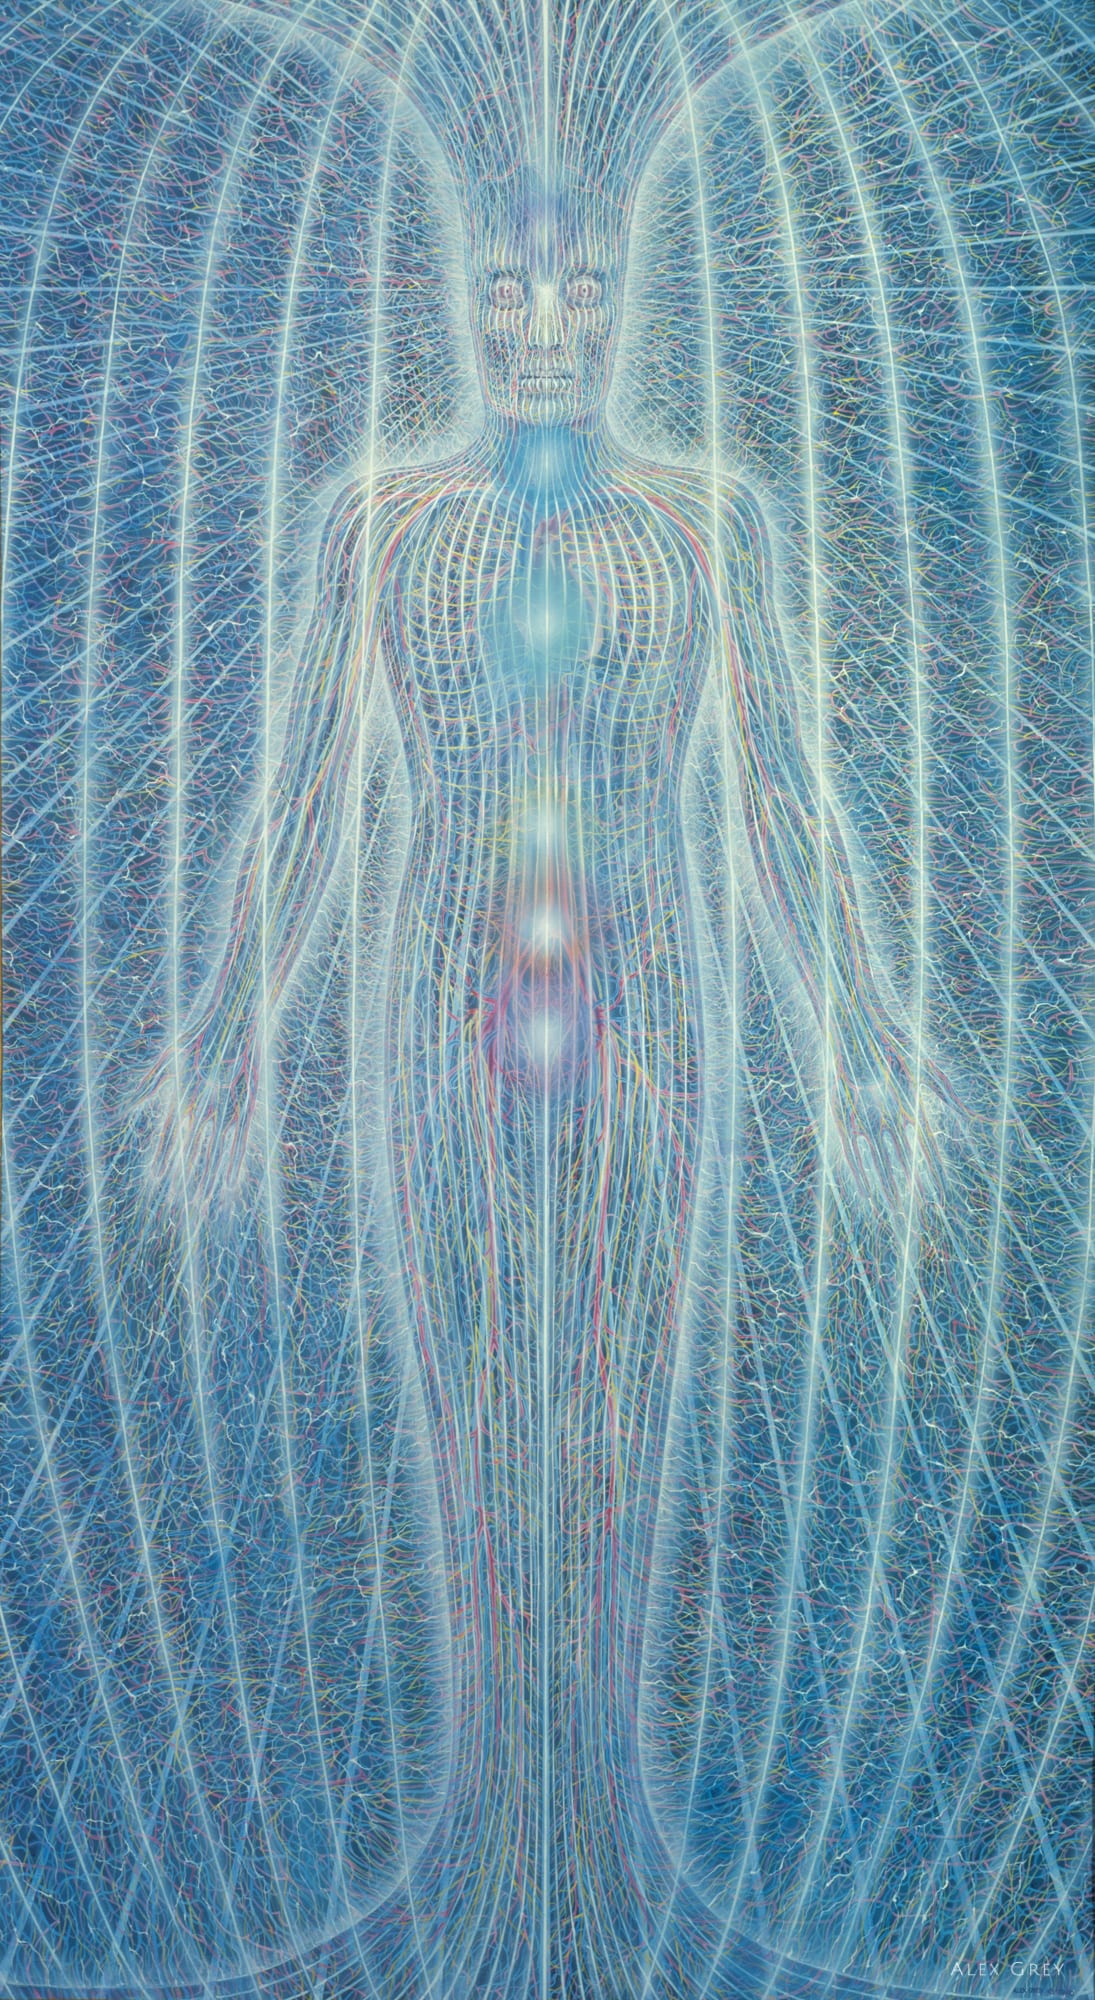 
Das spirituelle Energiesystem (Spiritual Energy System, 1981)